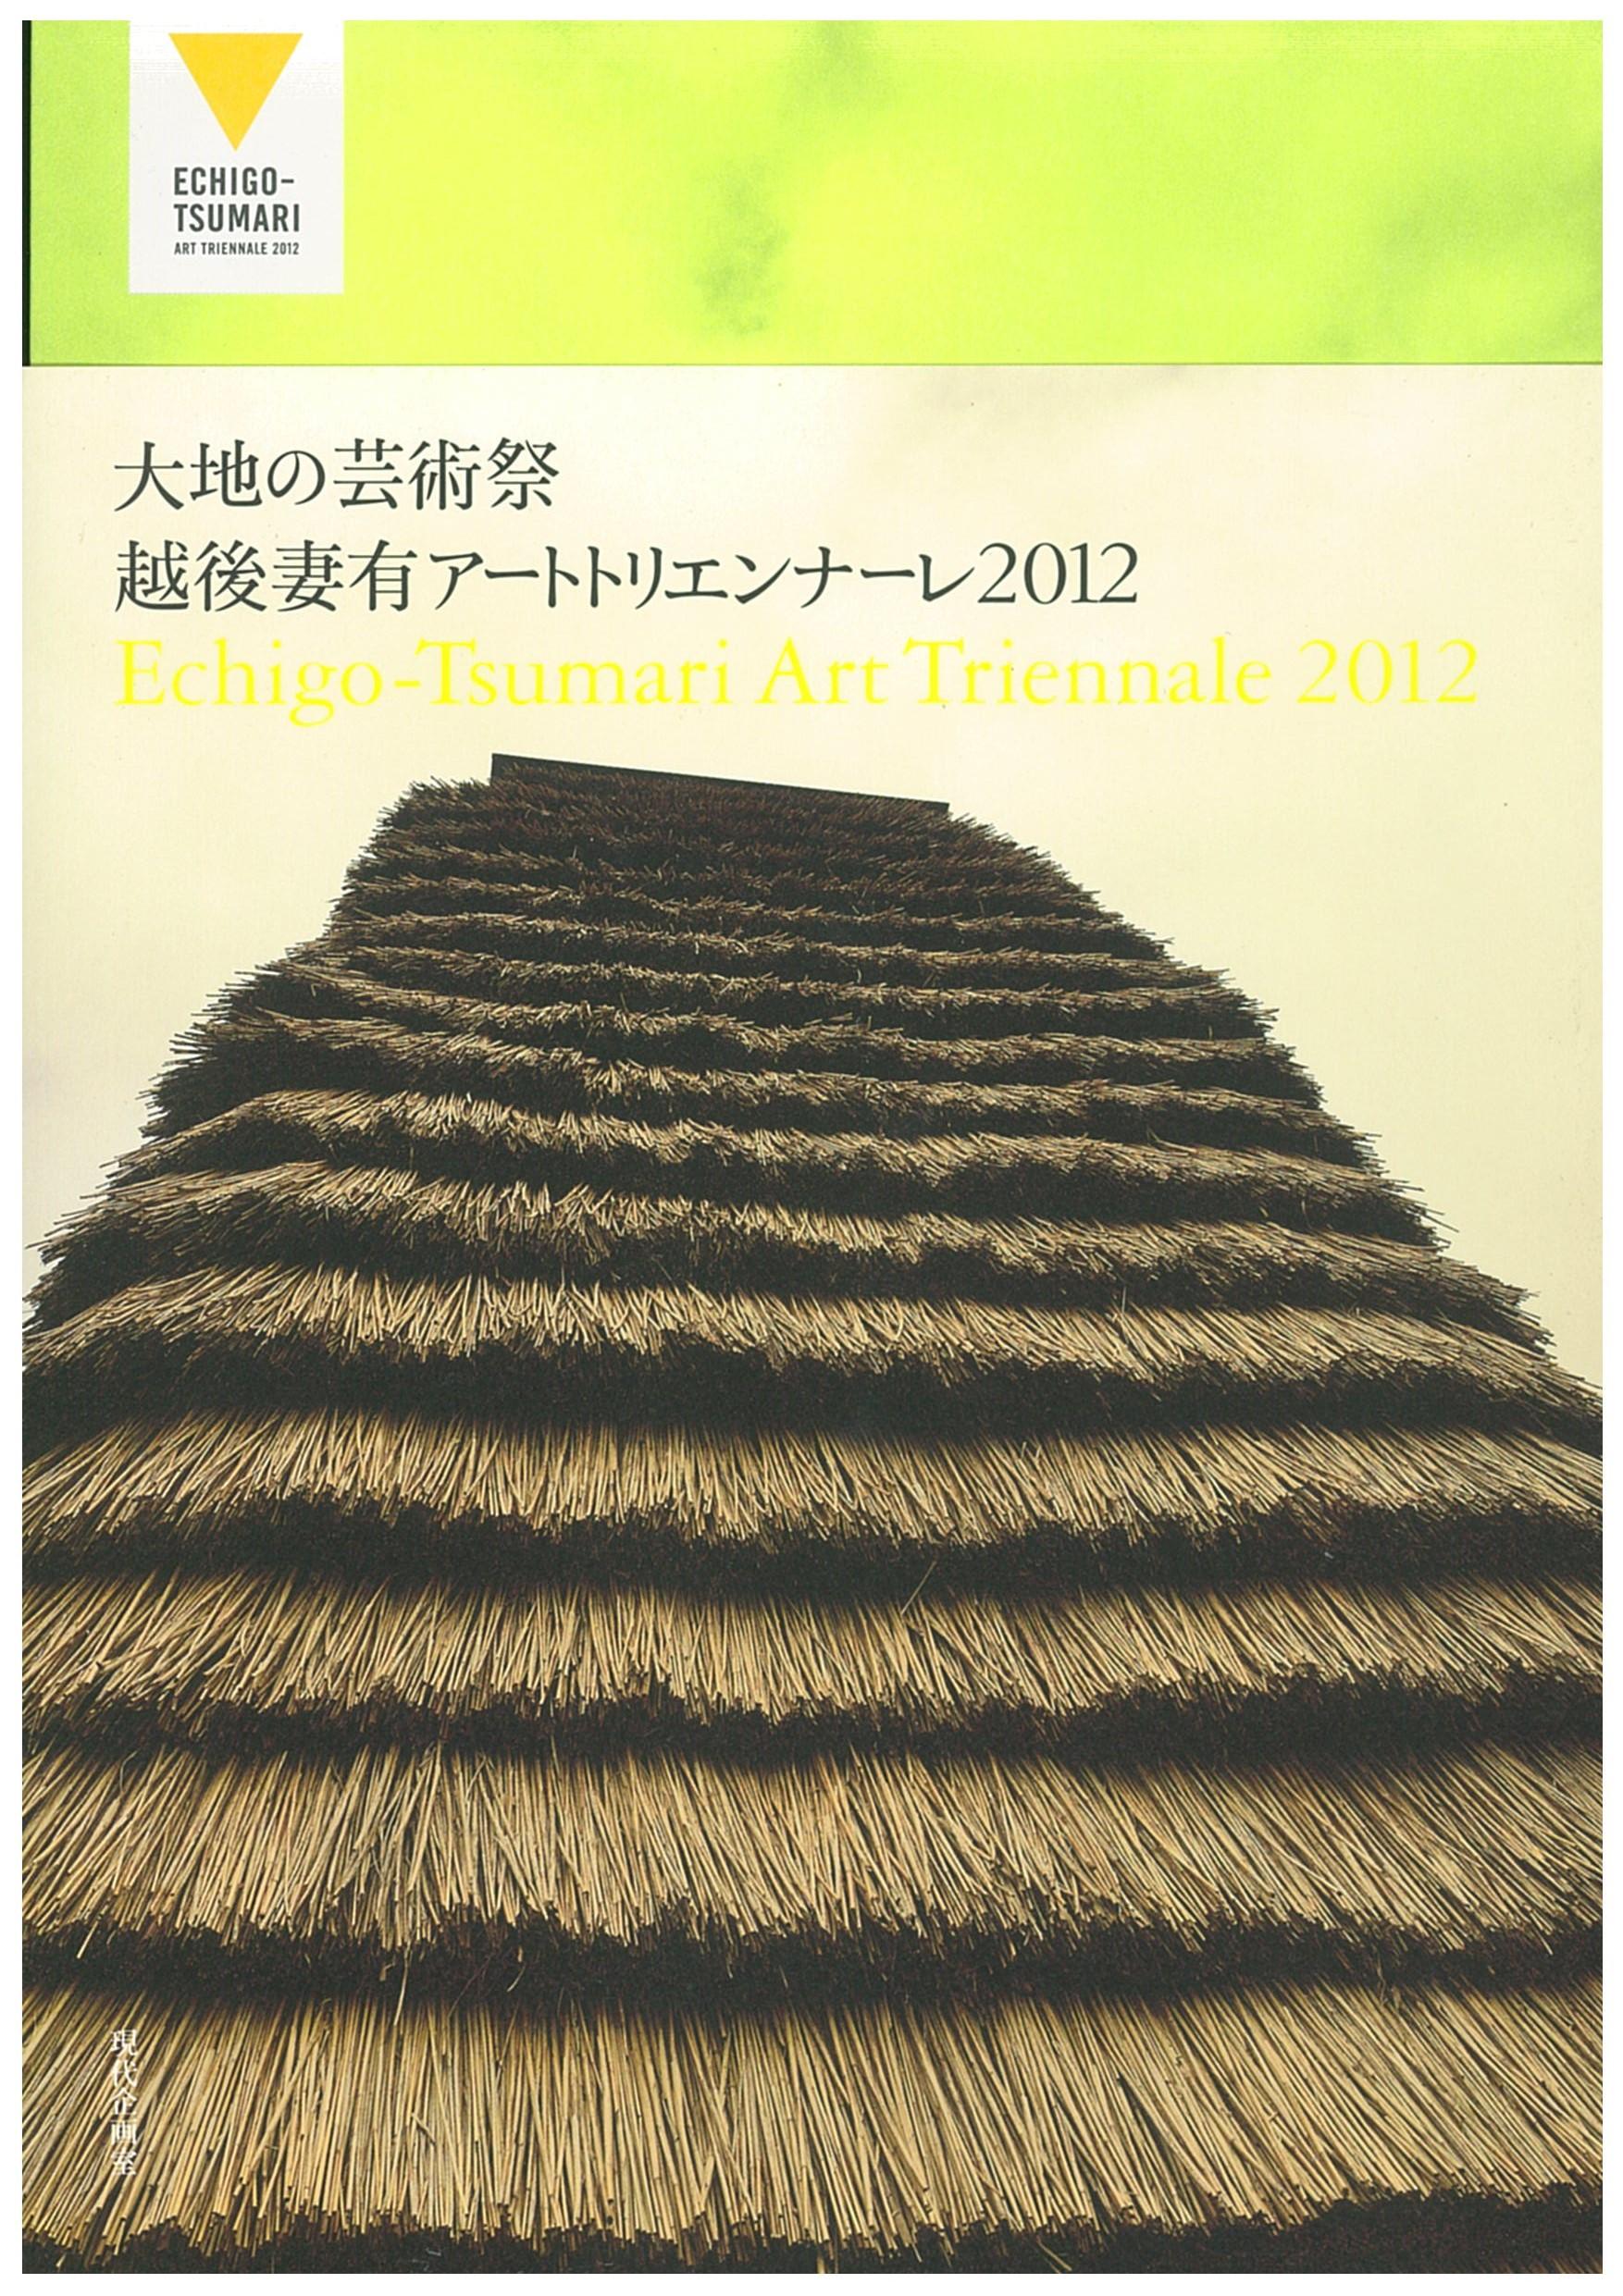 Official document book Echigo-Tsumari Art Triennale 2012 